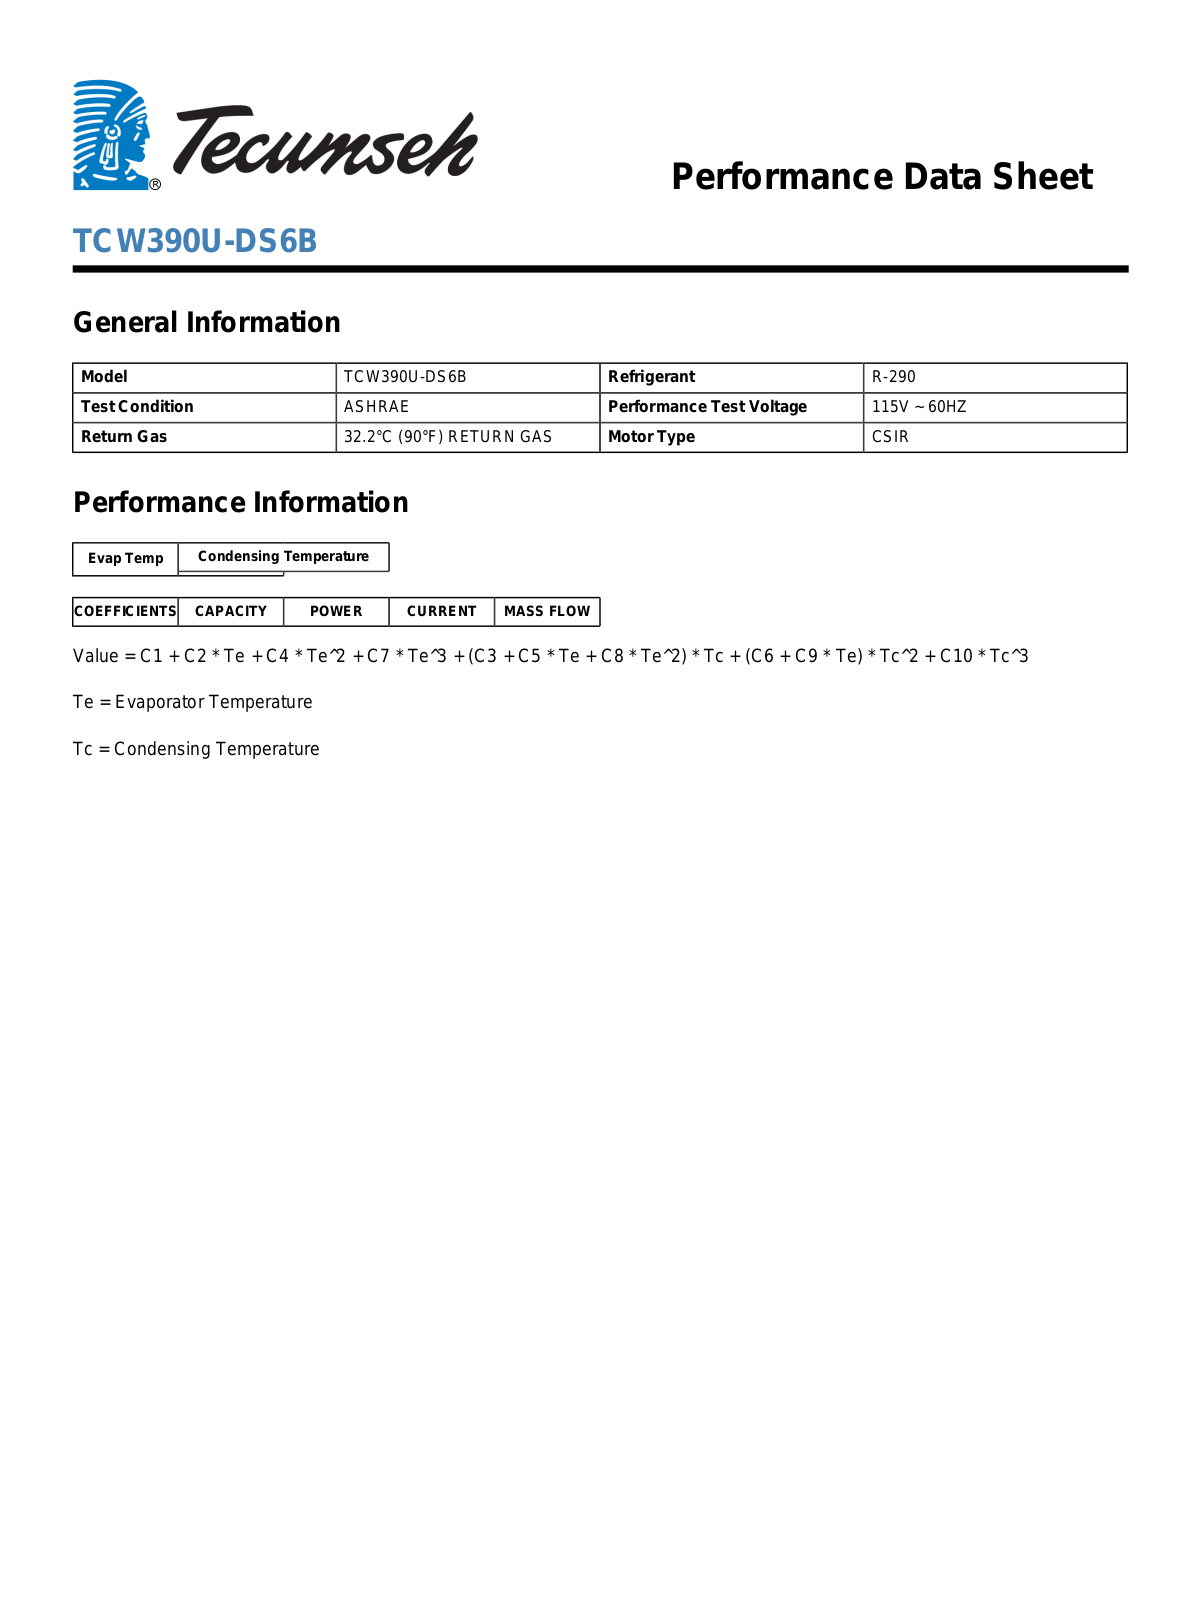 Tecumseh TCW390U-DS6B Manual